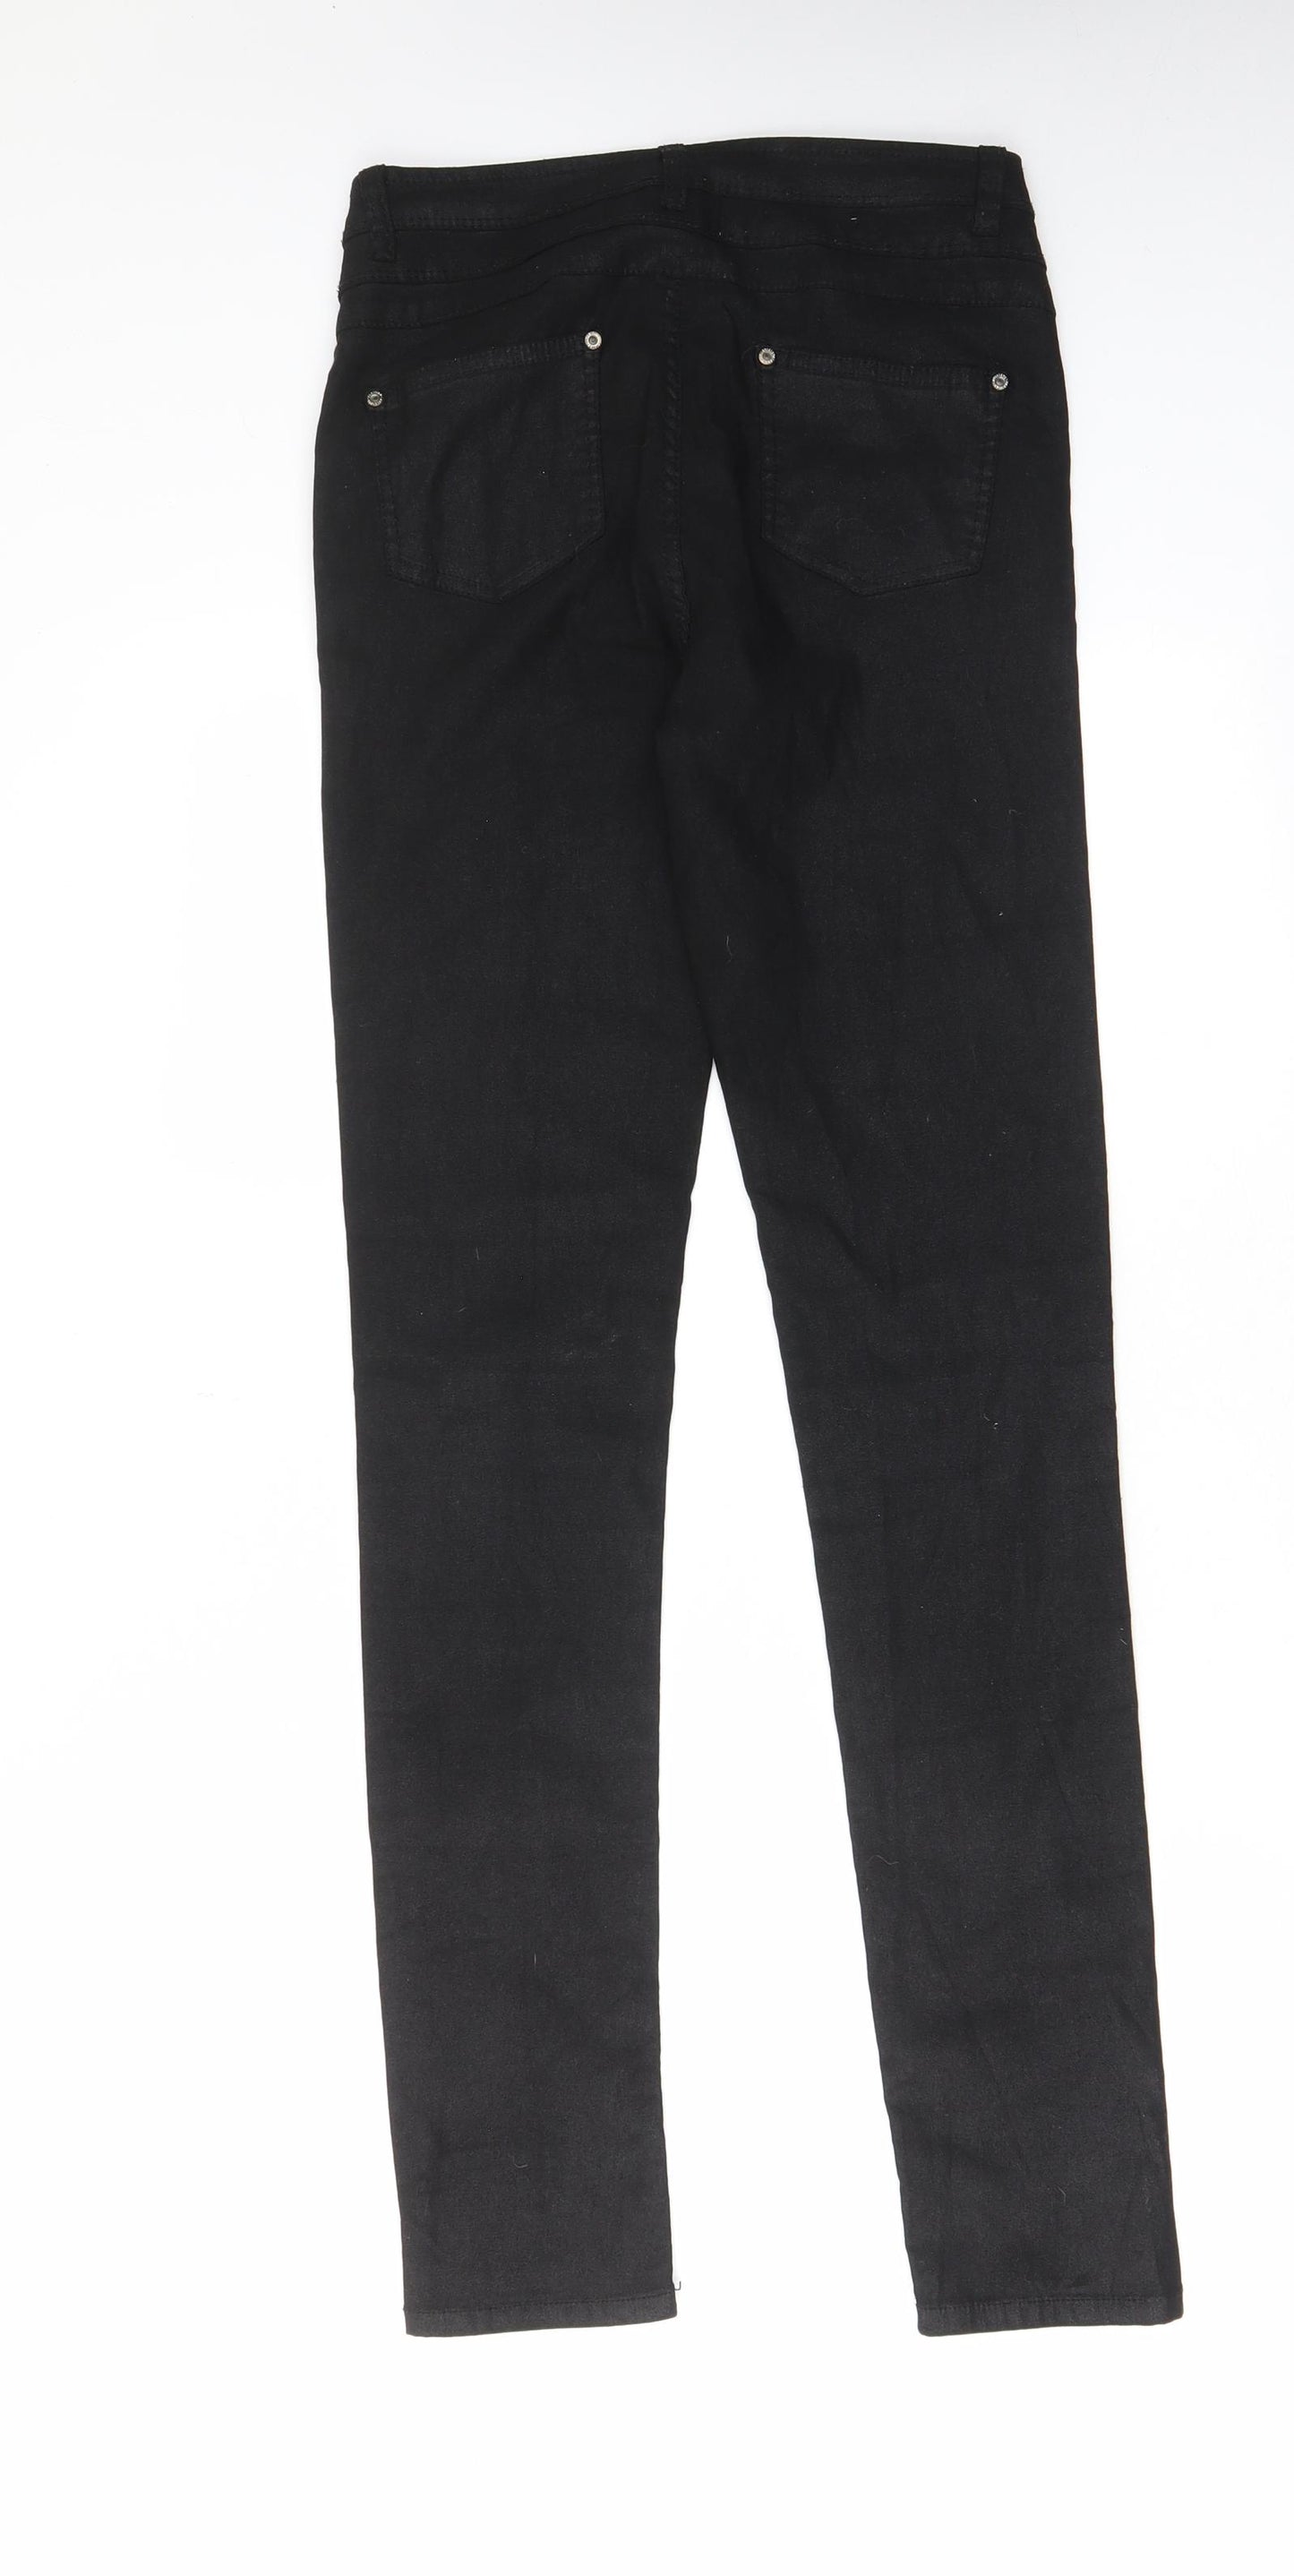 PARISIAN SIGNATURE Womens Black Cotton Skinny Jeans Size 10 L31 in Regular Zip - Pockets, Belt Loops